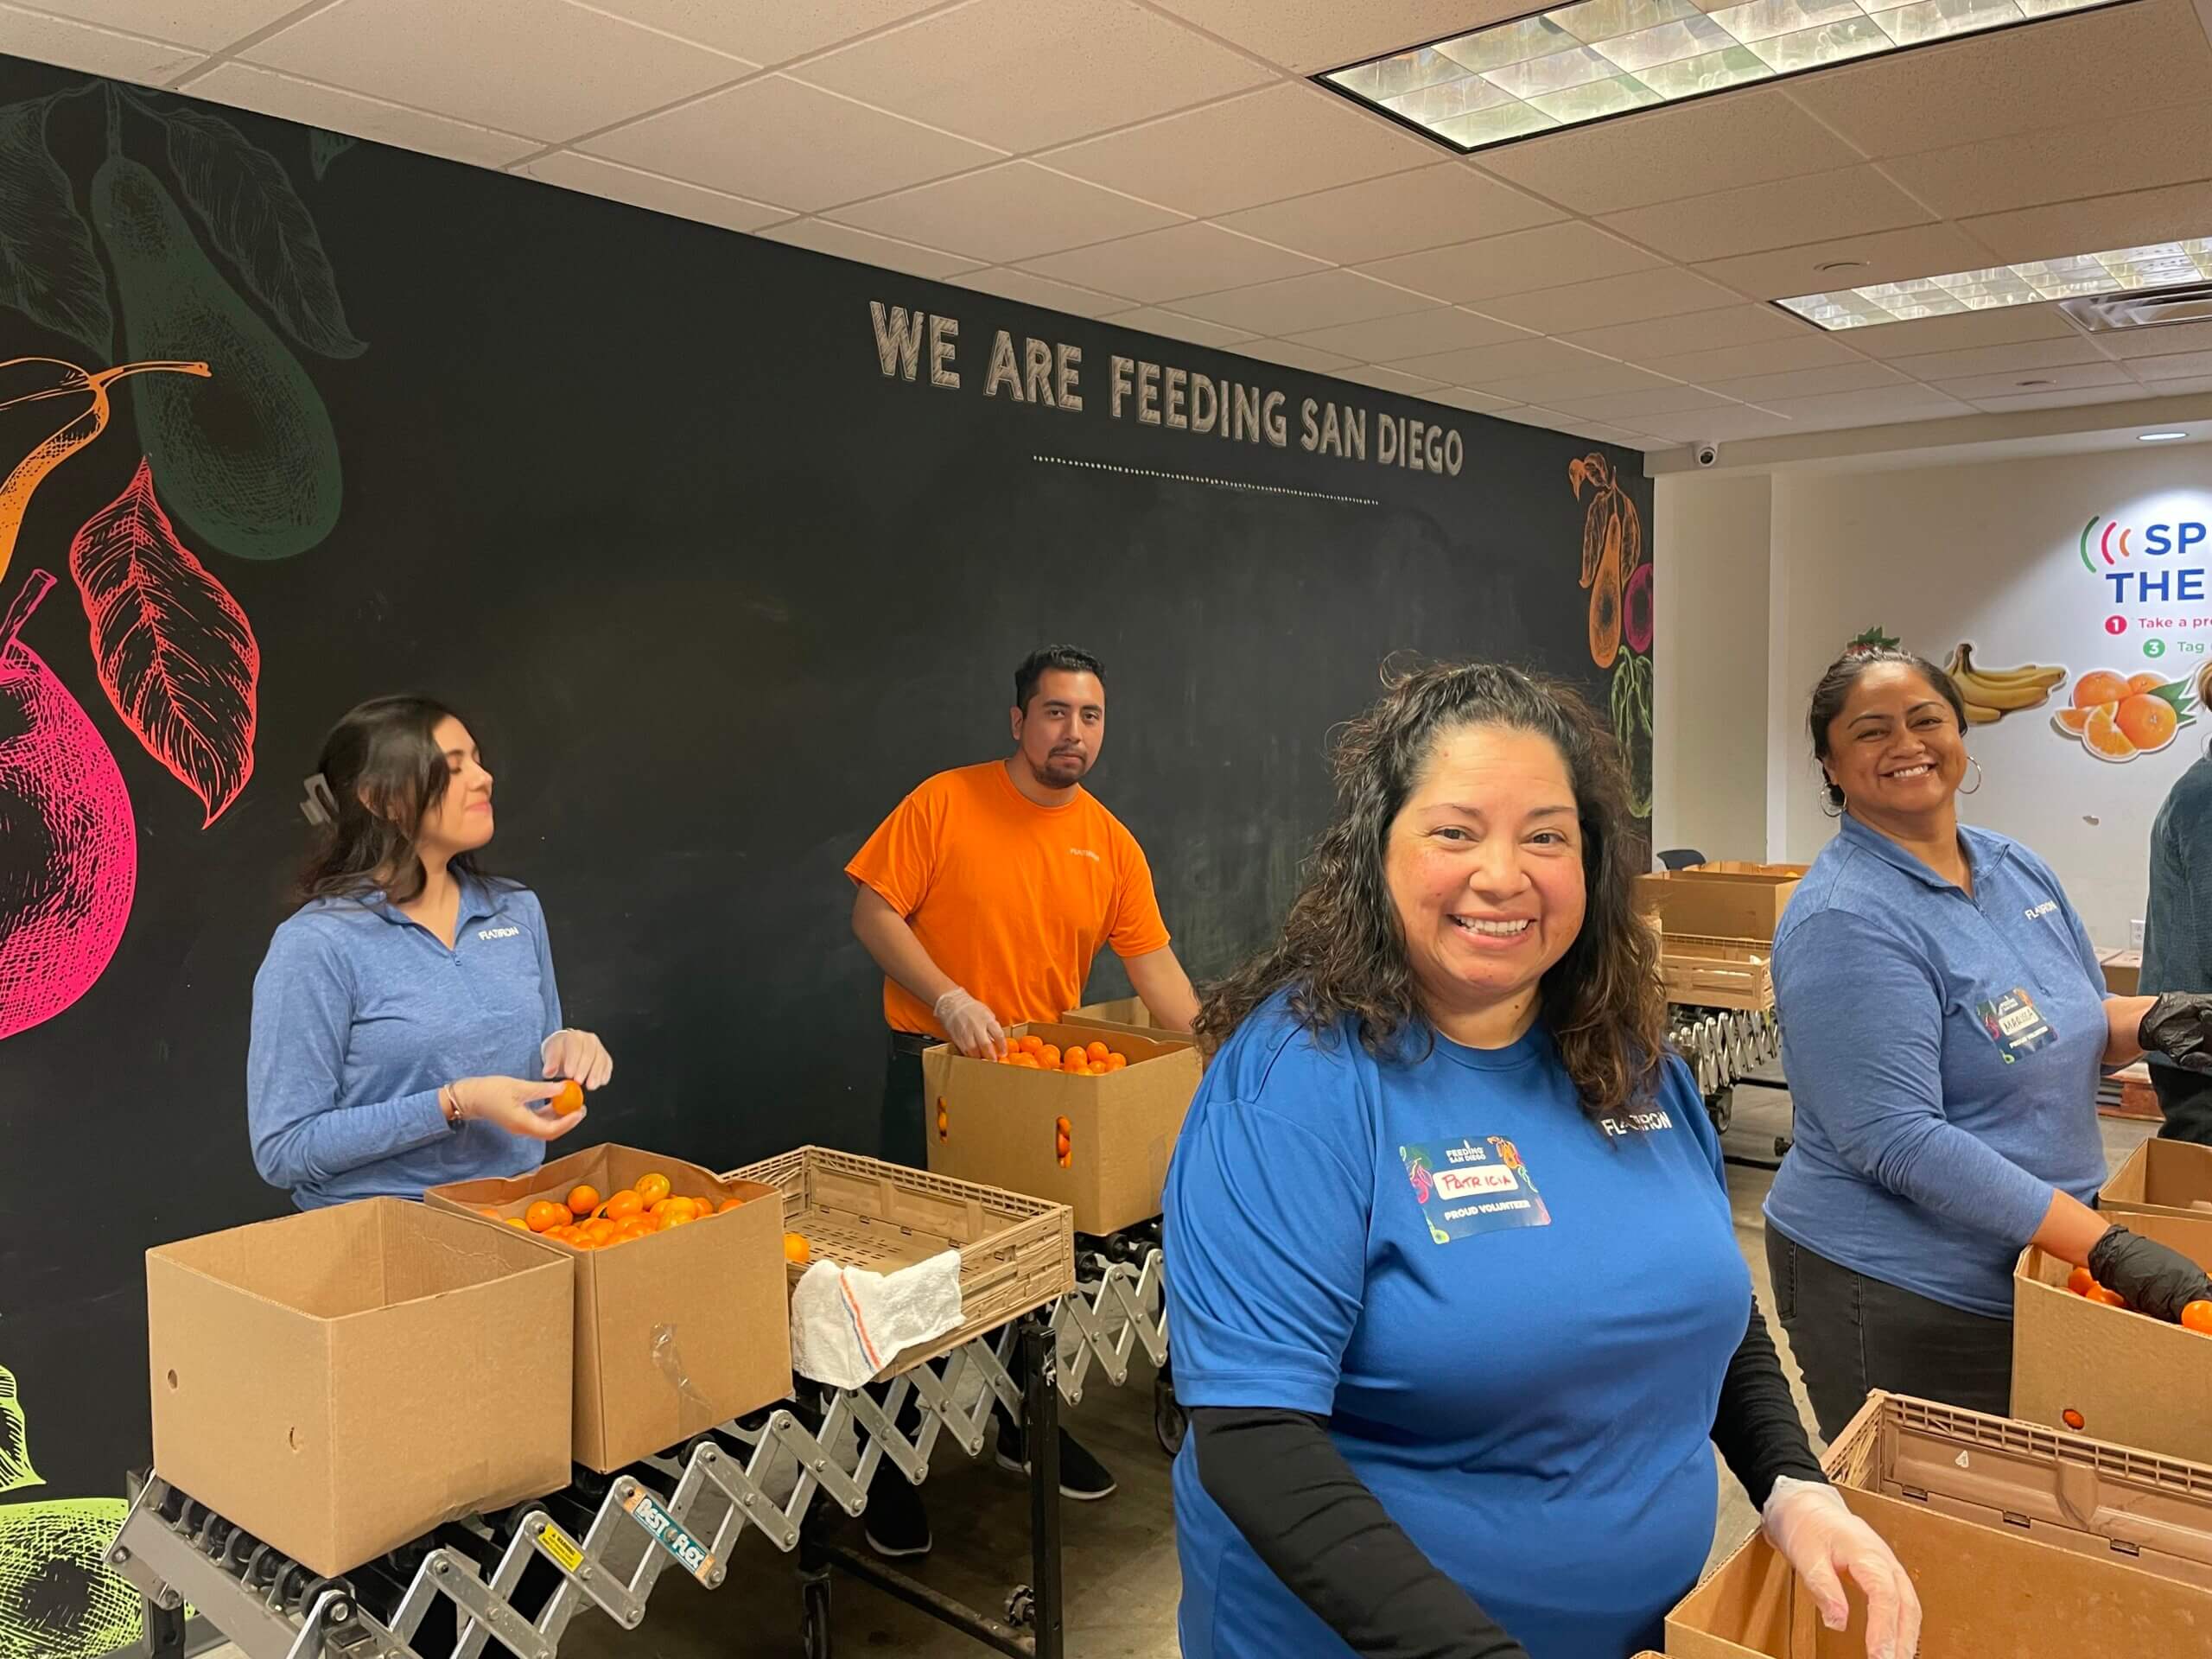 Flatiron employees volunteering at Feeding America